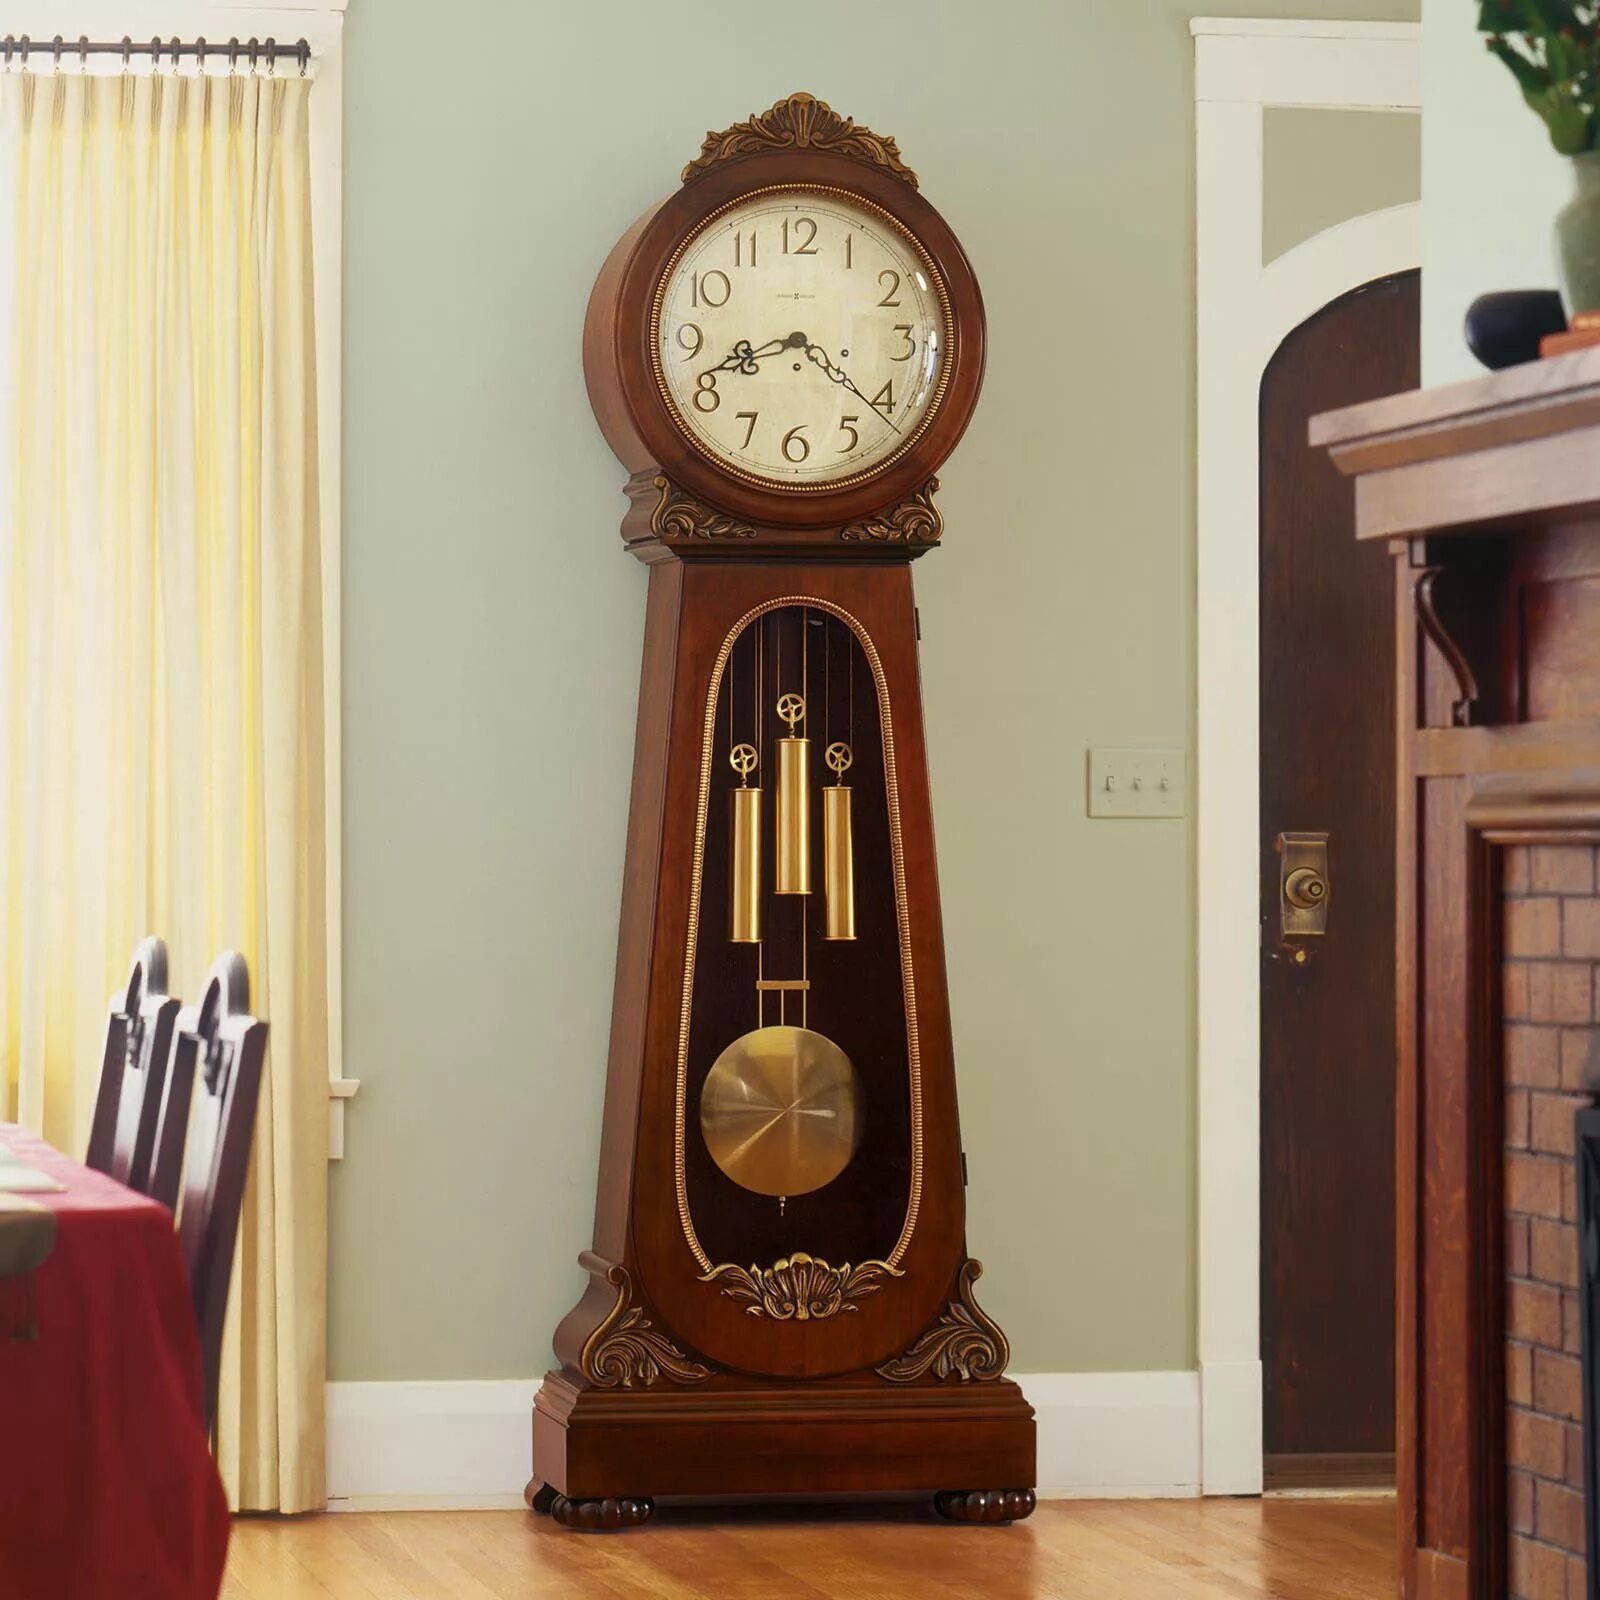 Напольные часы 5. Grandfather Clock часы. Напольные часы в интерьере. Старинные напольные часы.